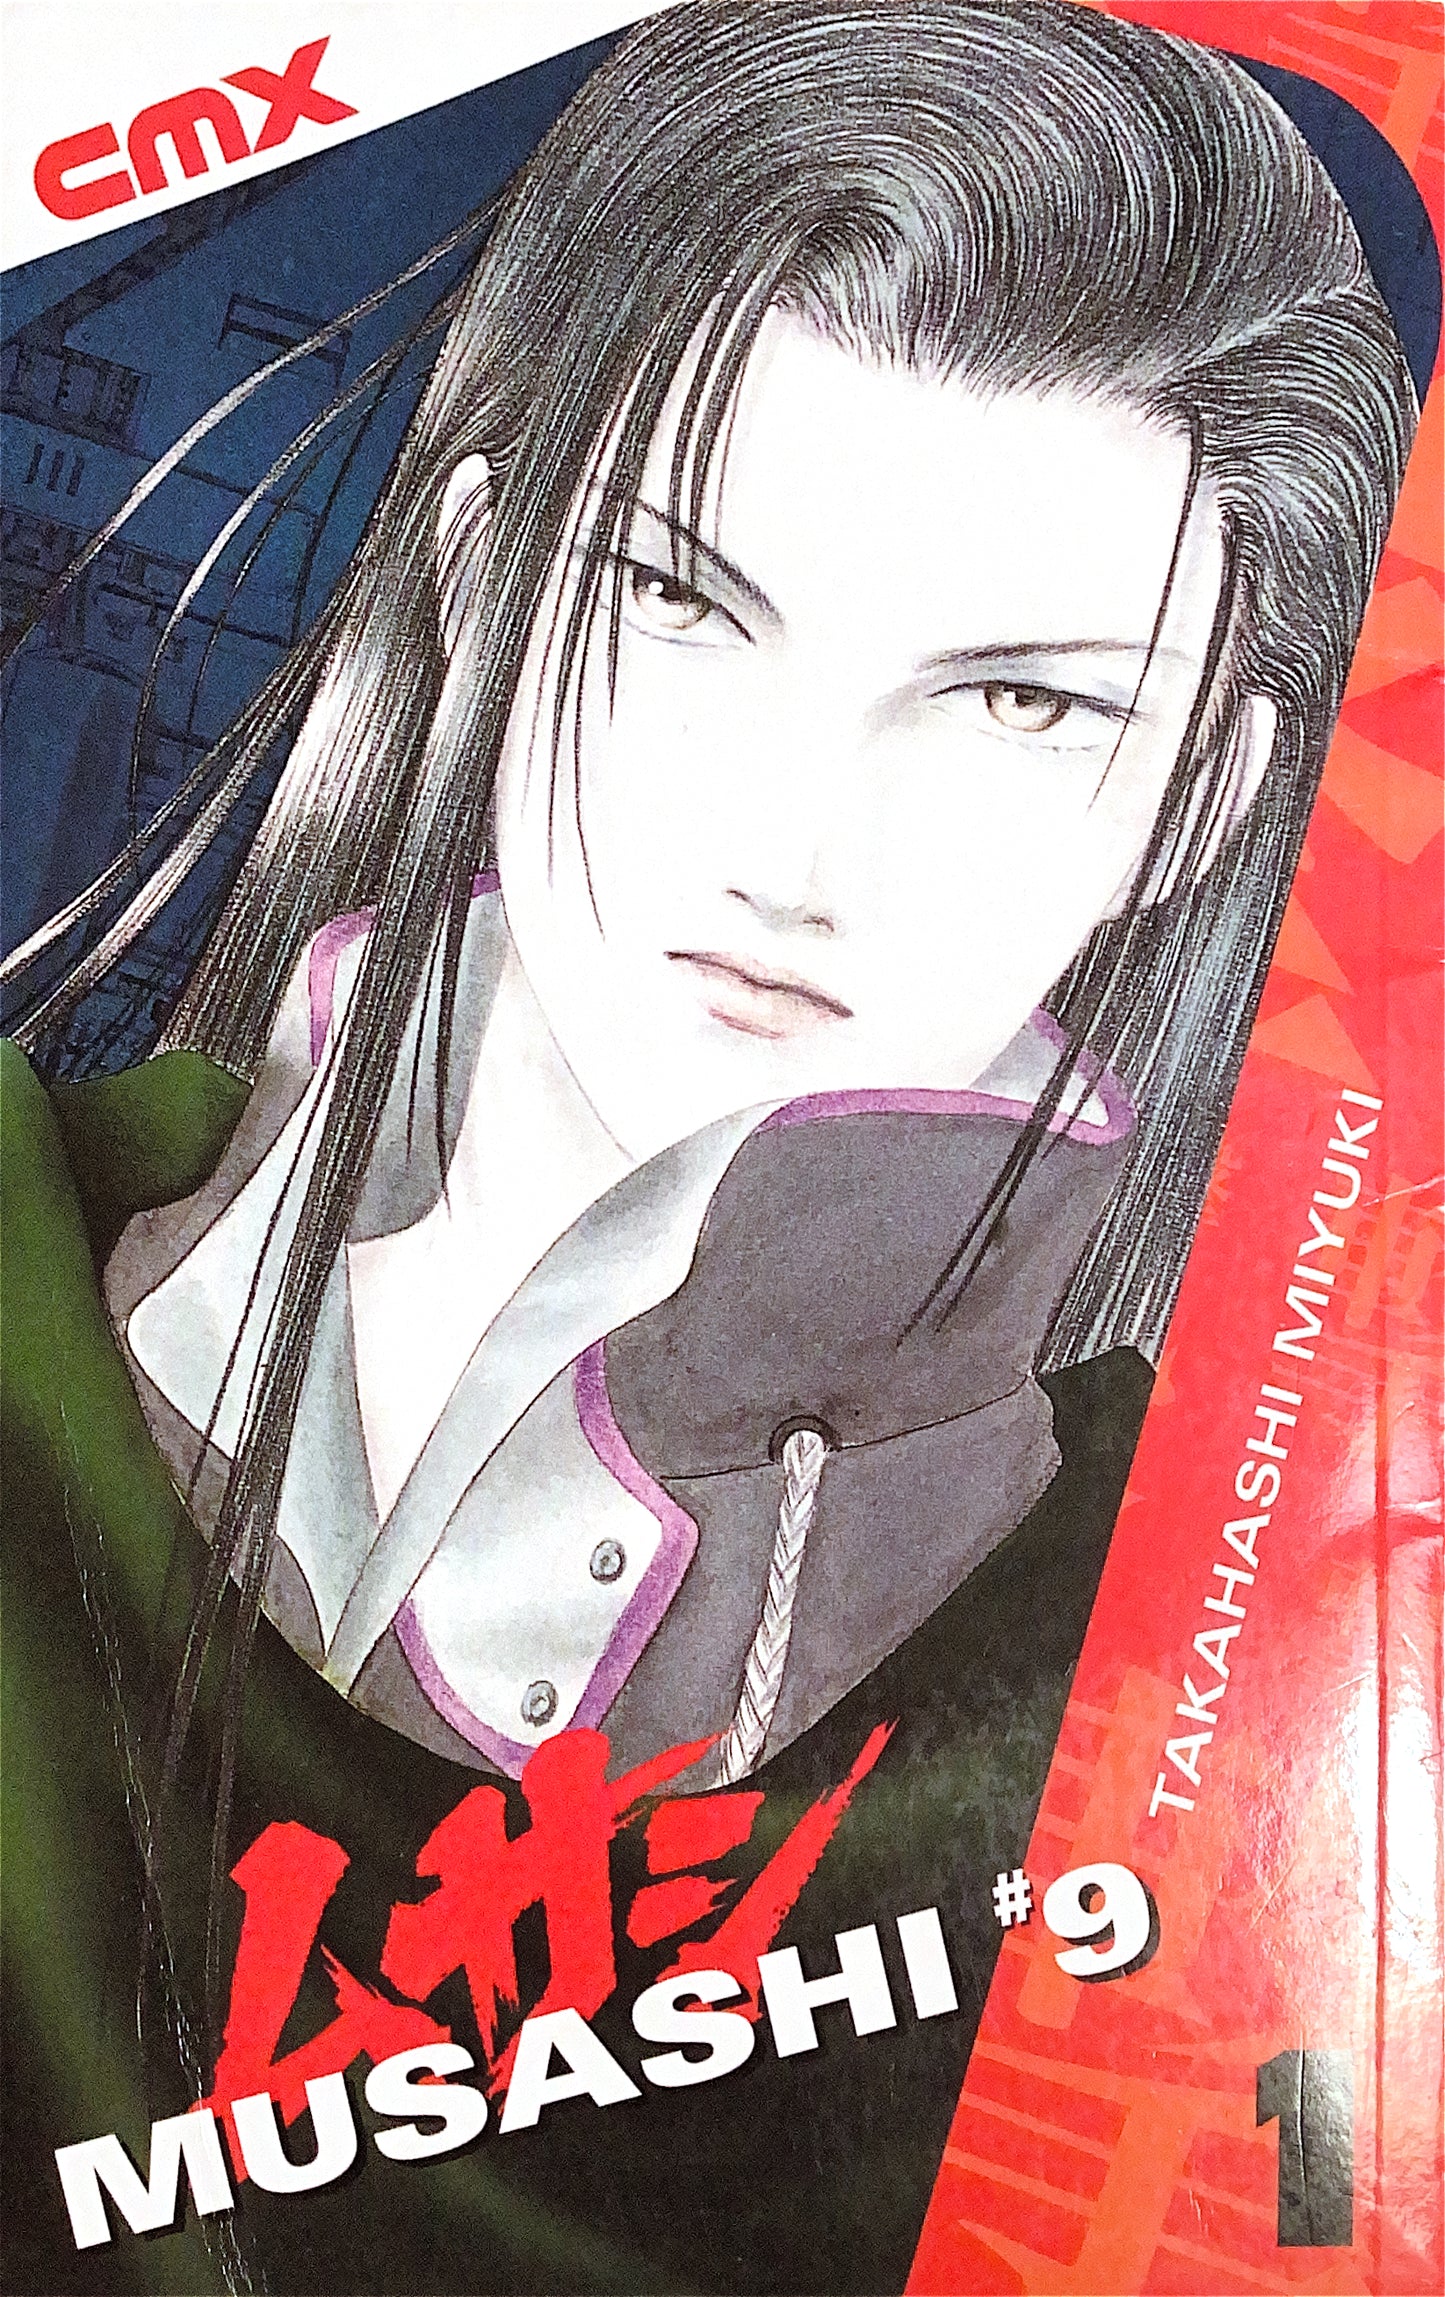 Musashi's #9 Vol. 1 - (Used)